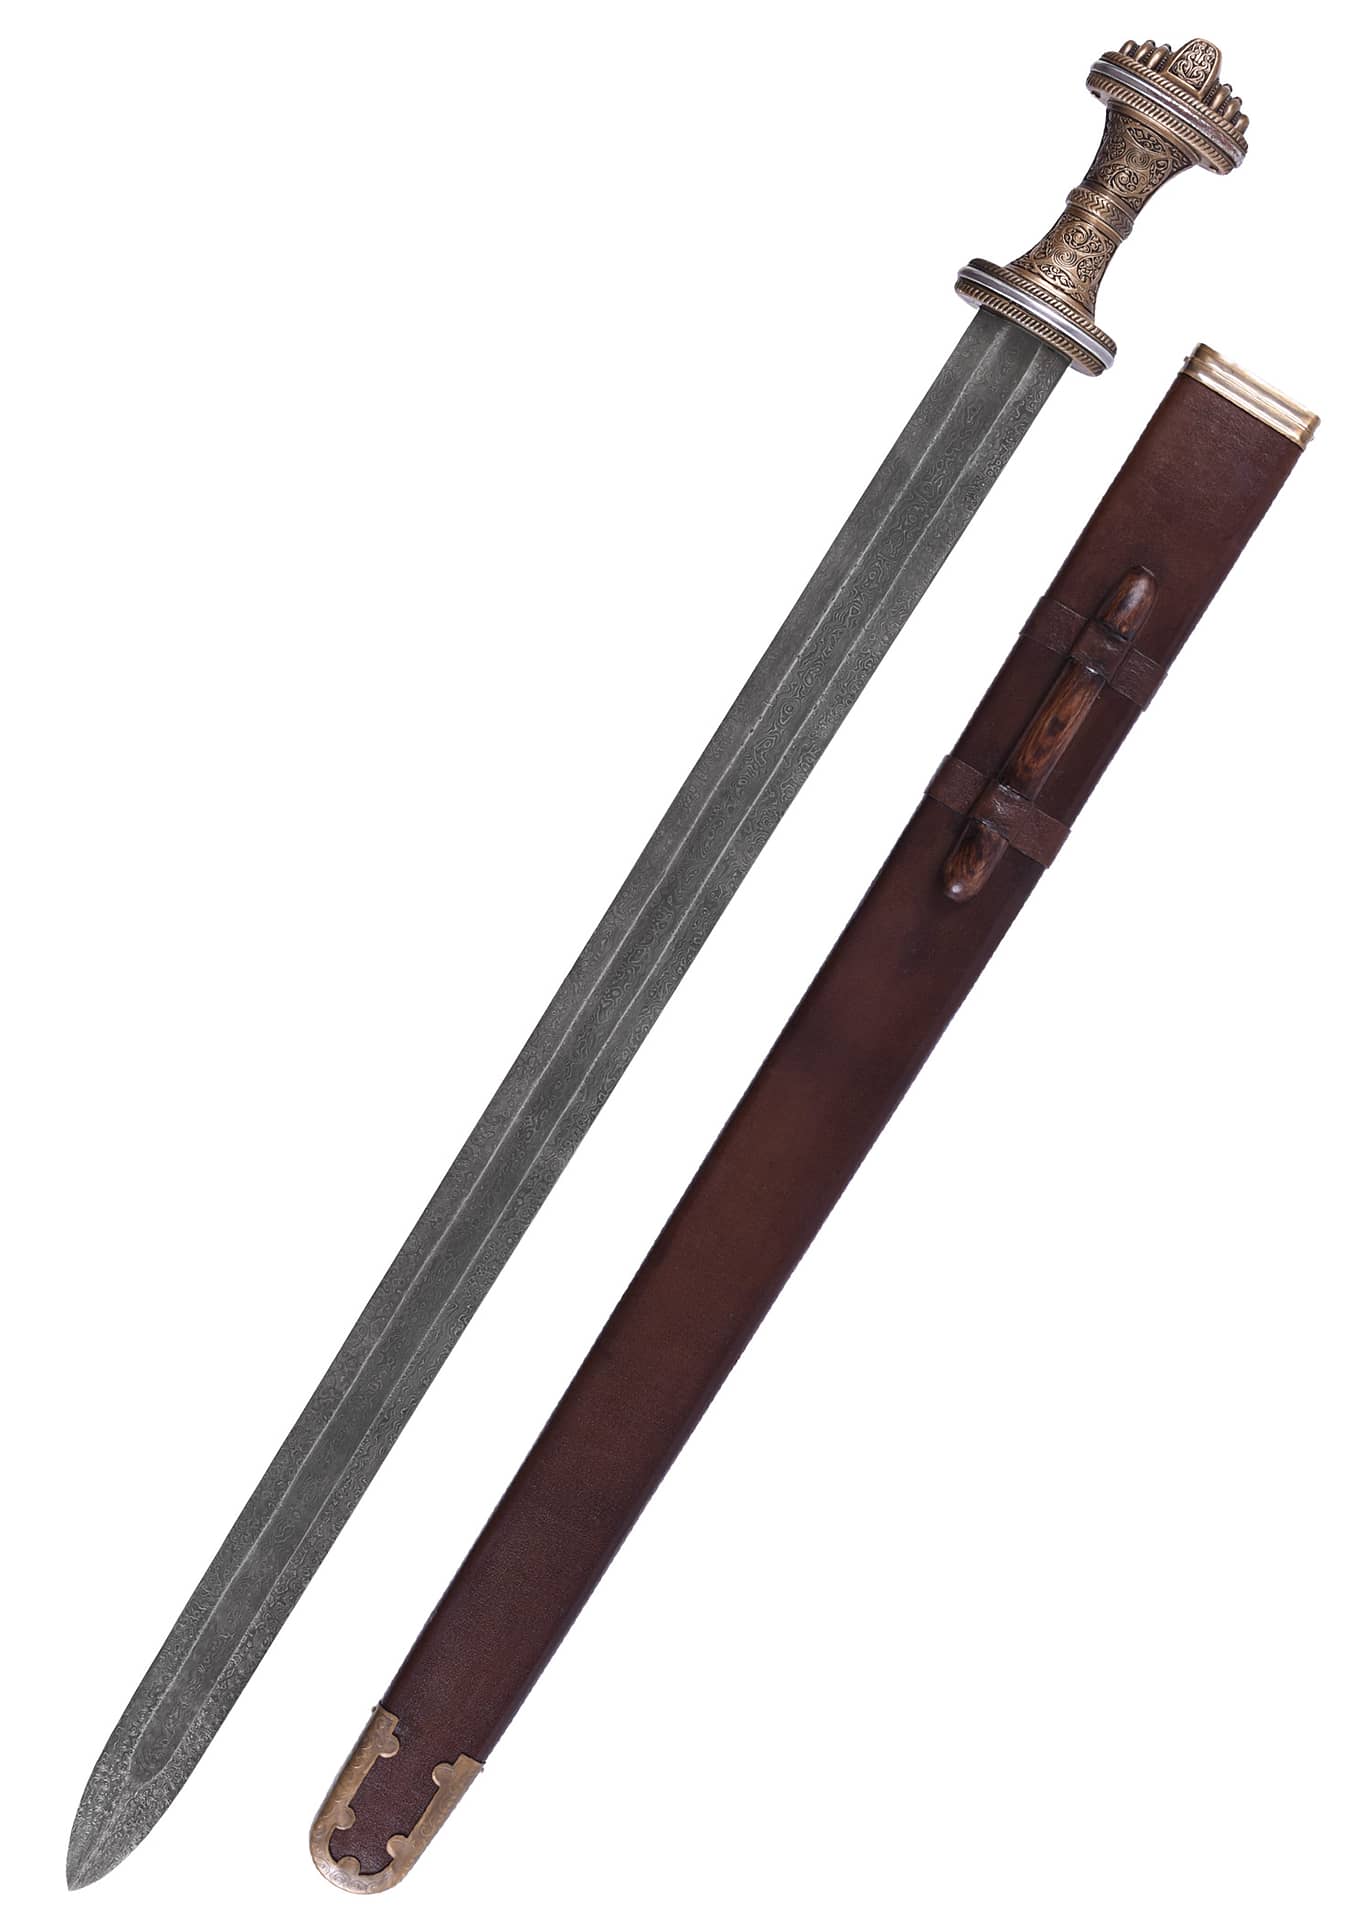 Espada anglosajona Fetter Lane, siglo VIII, acero de Damasco 0116041301 - Espadas y Más